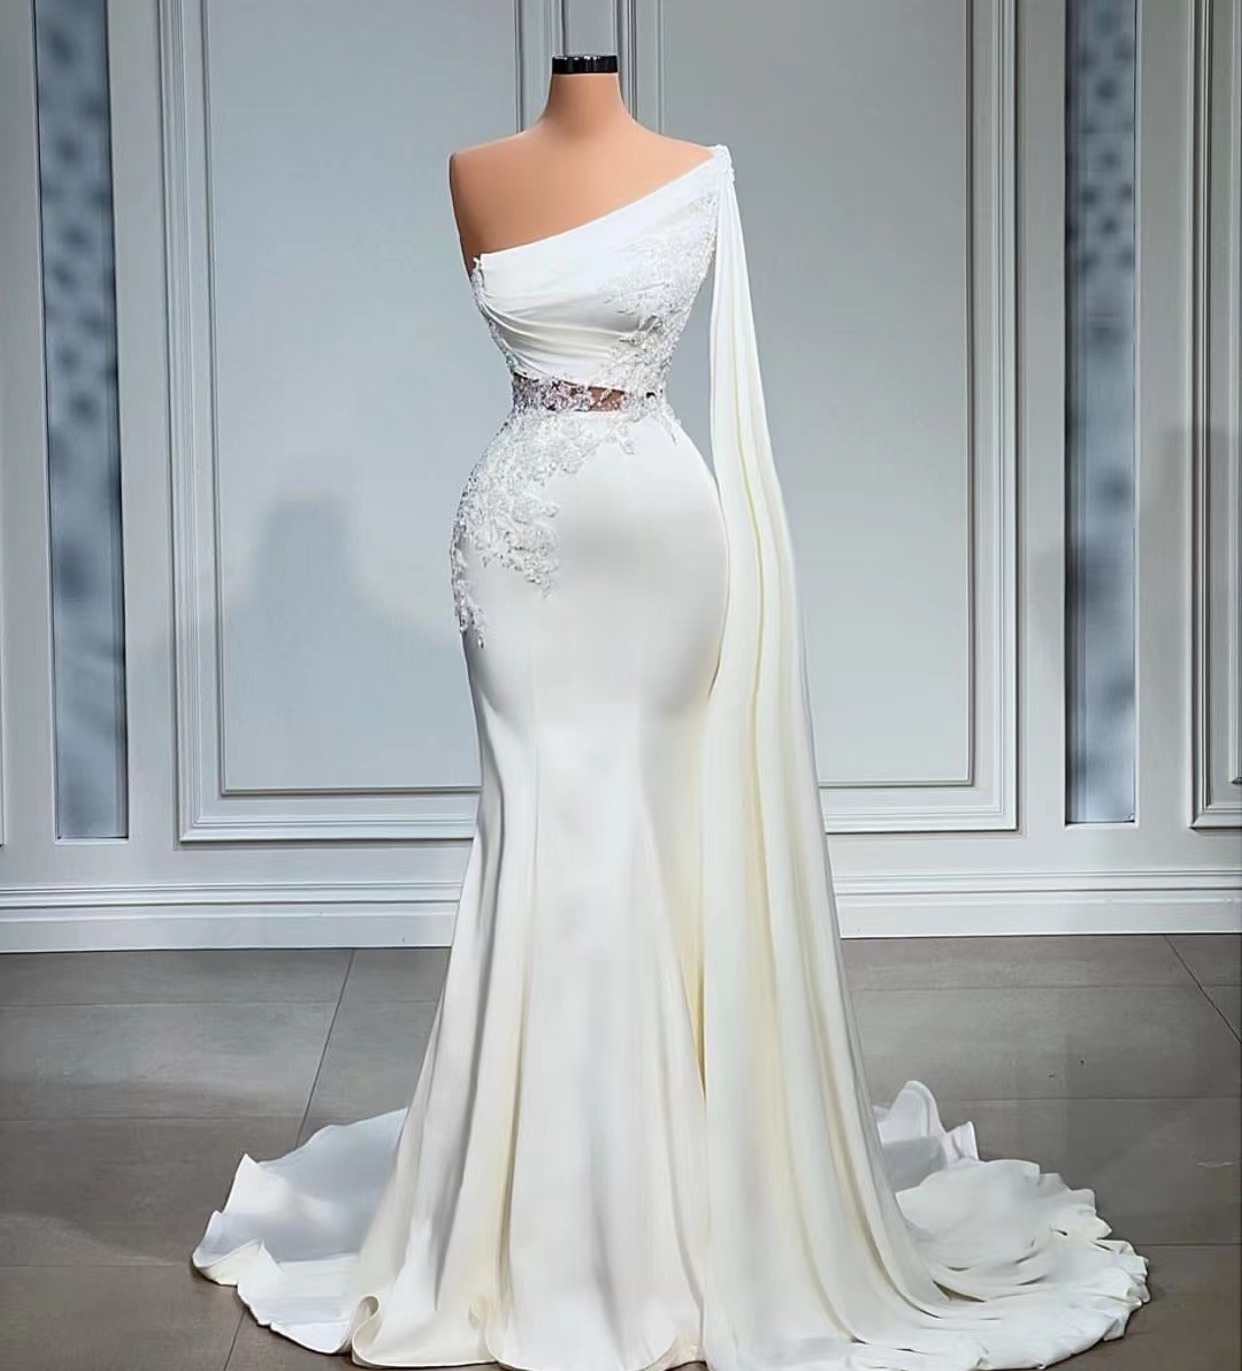 One Shoulder Wedding Dresses For Bride Lace Applique Beaded Elegant Simple Wedding Gown Robes De Mariage Simple Bridal Dresses